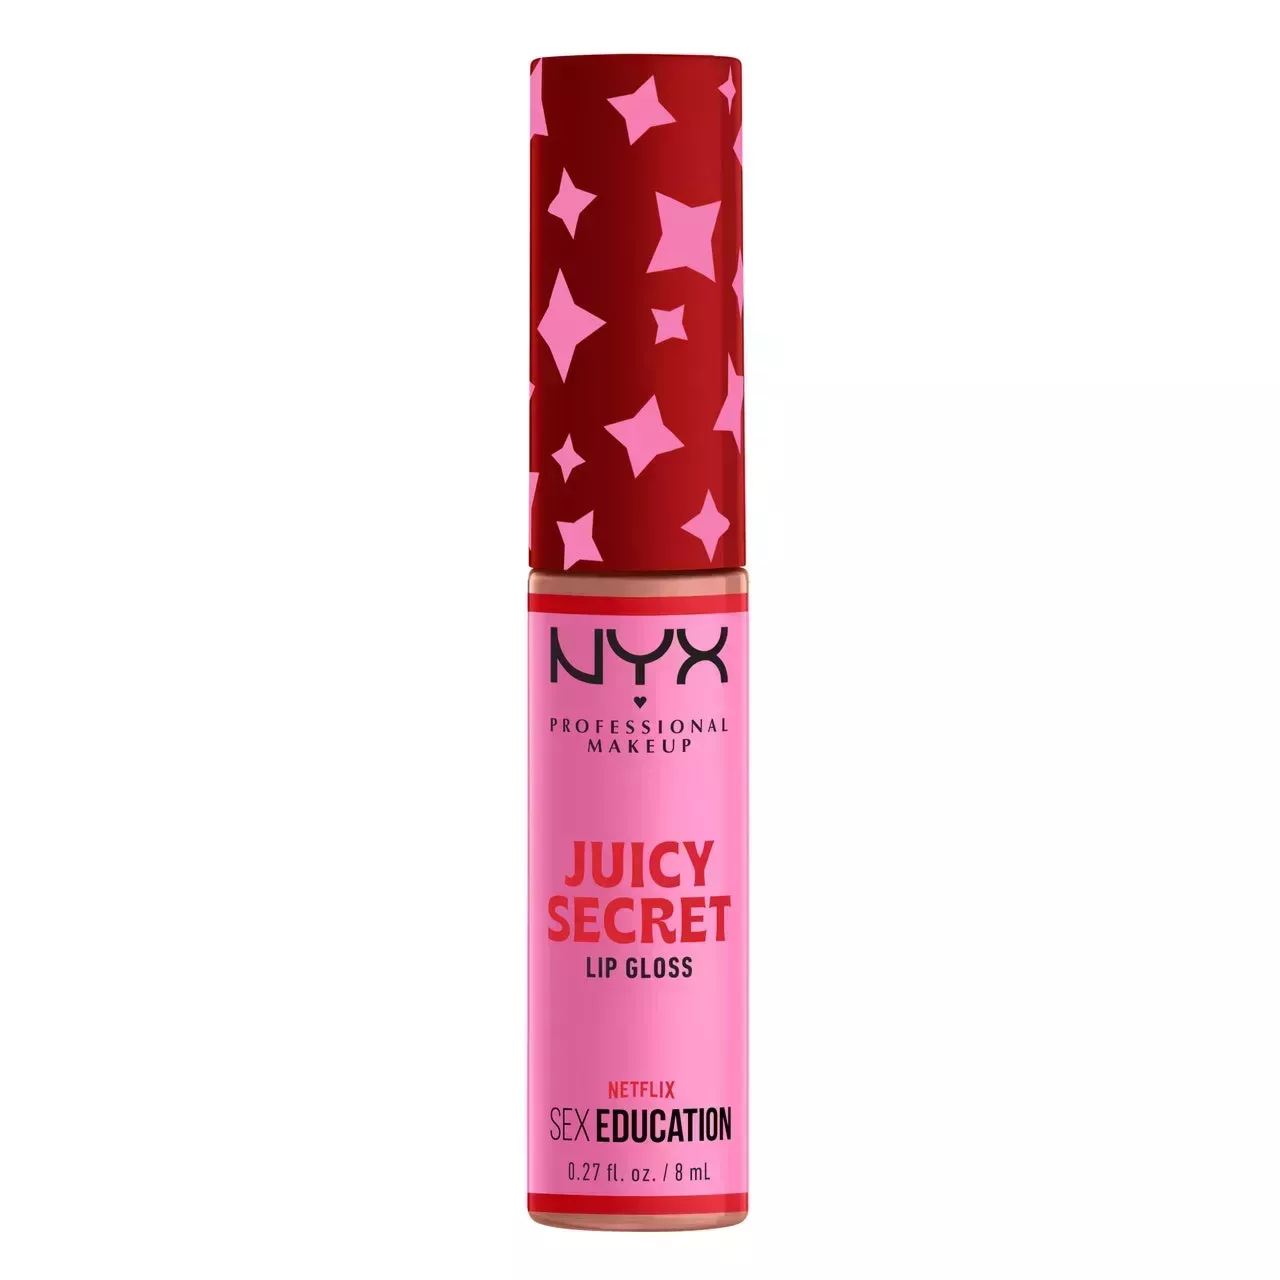 Nyx Professional Makeup Juicy Secret Lip Gloss